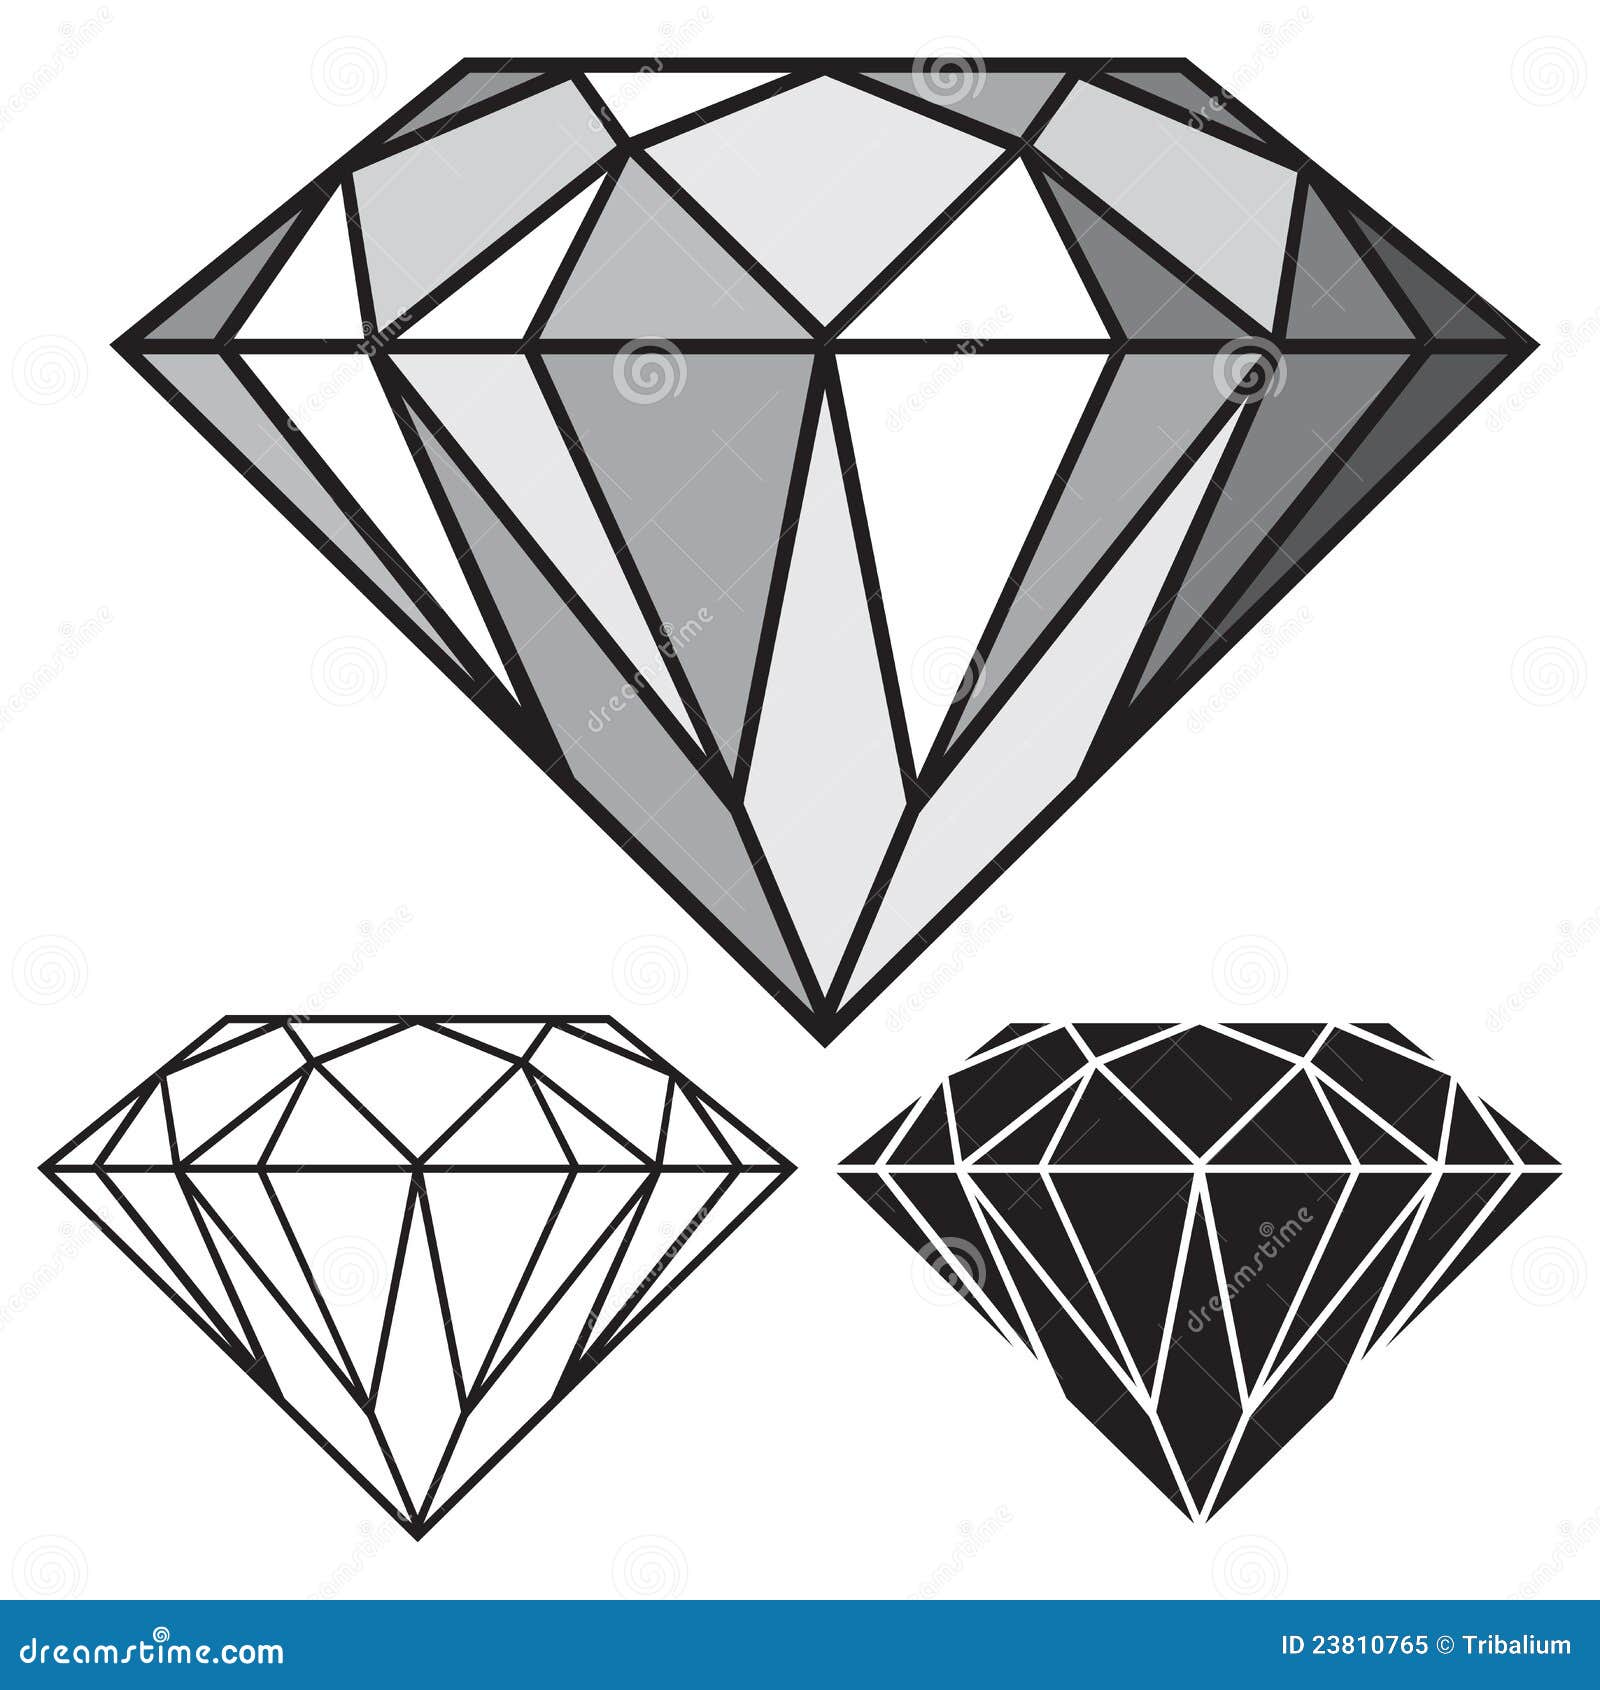 83 100+ Diamant Stock Illustrations, graphiques vectoriels libre de droits  et Clip Art - iStock